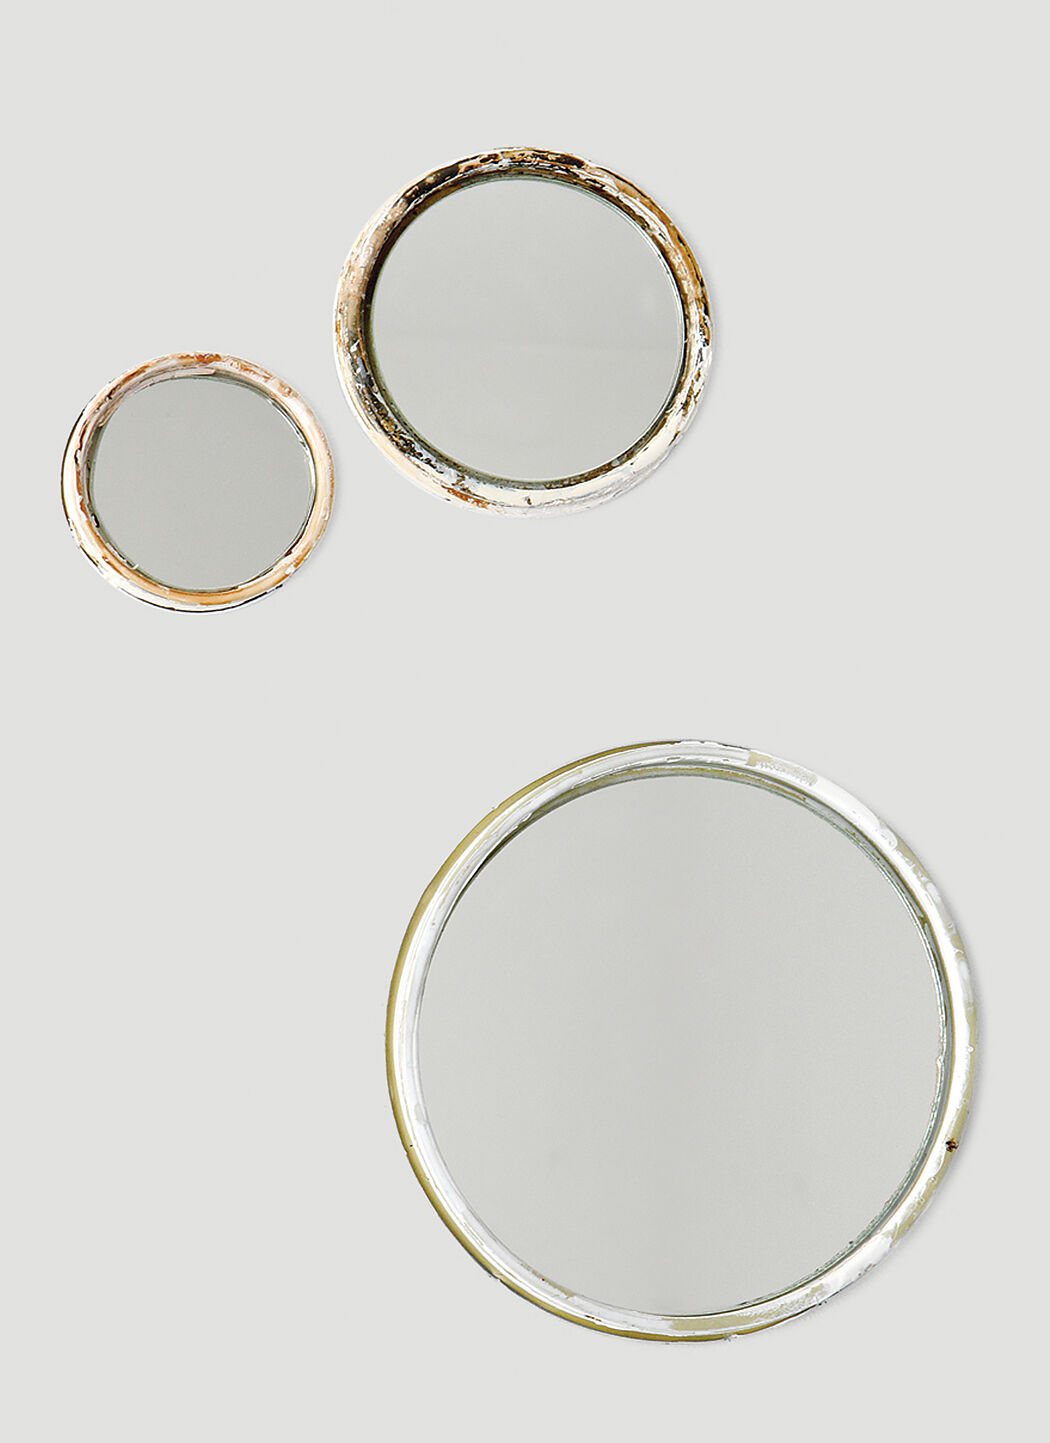 Marloe Marloe Set of Three Mirrors Cream rlo0351006